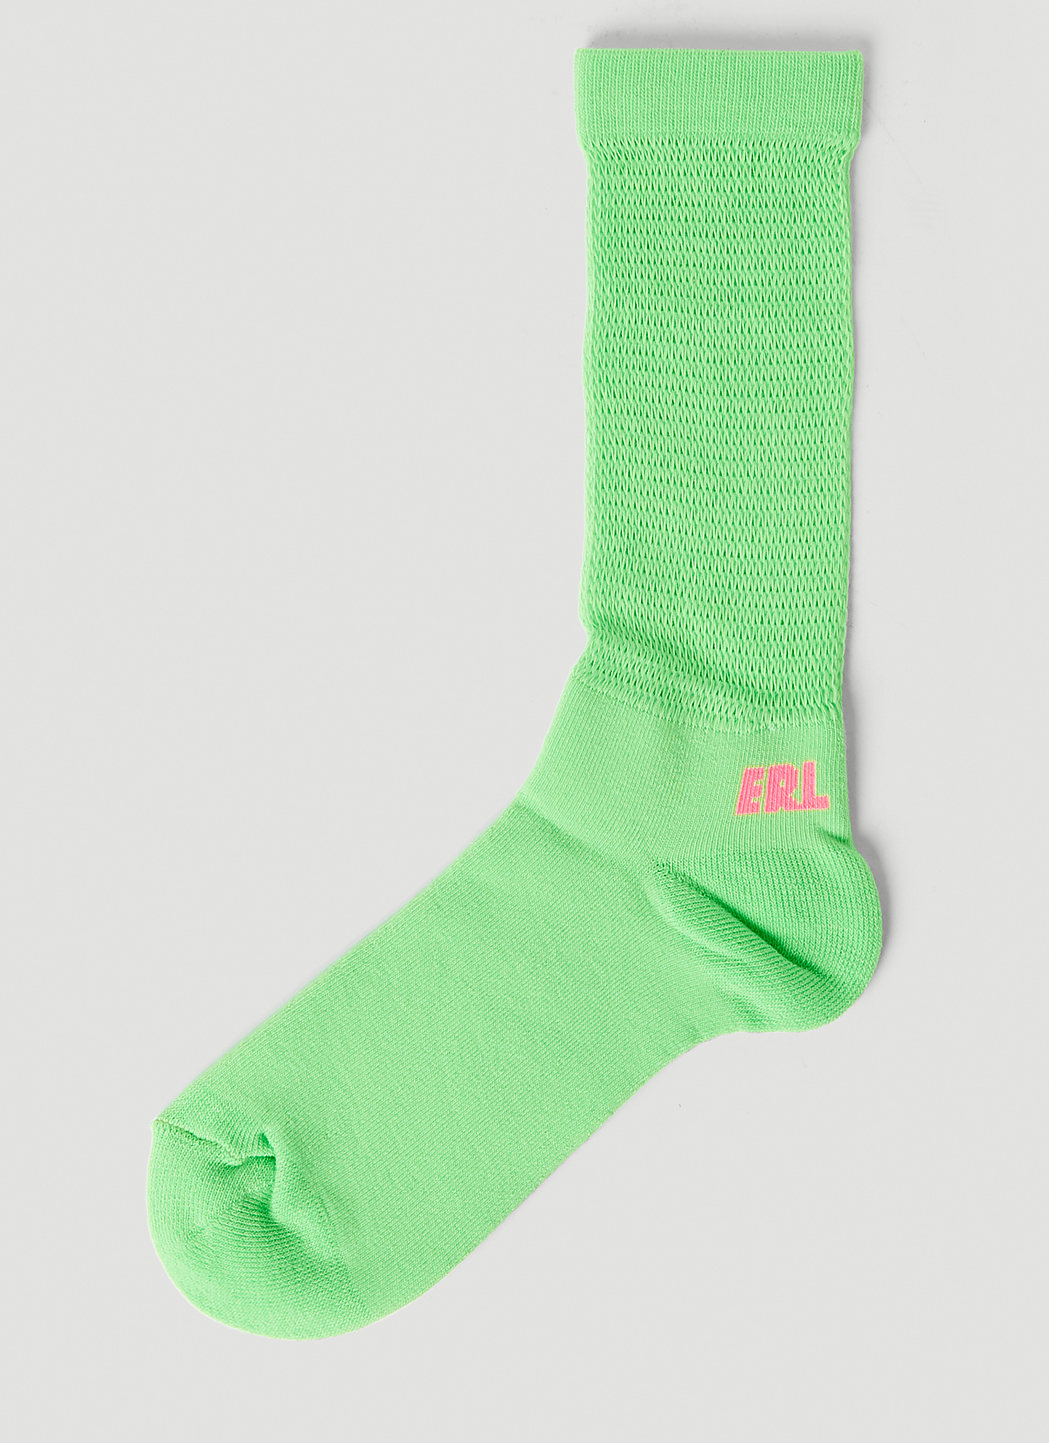 Openworks Socks